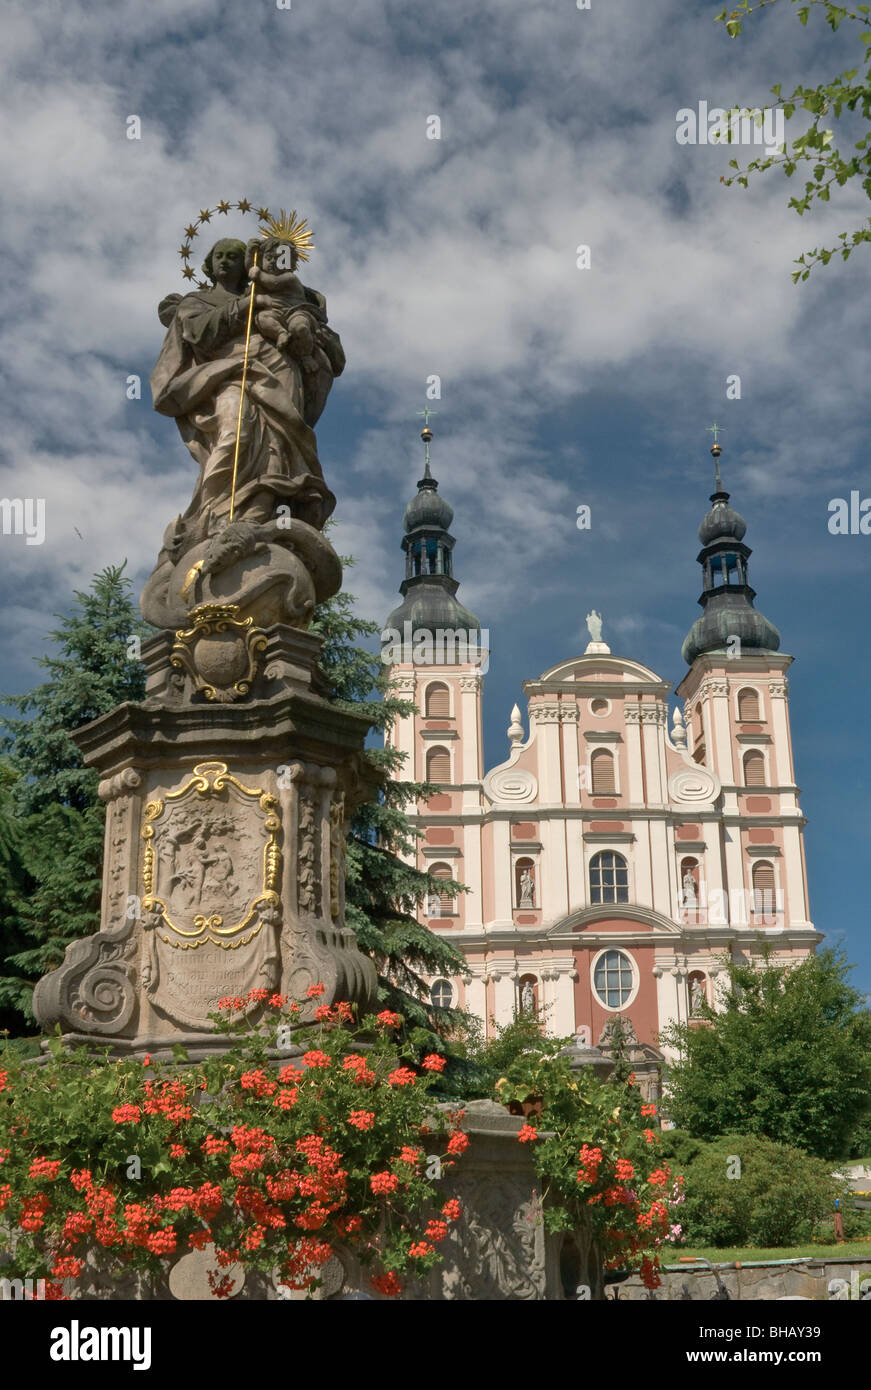 Holy Mary with Jesus statue at Rynek and Saint Nicholas Church in Otmuchów, Opolskie, Poland Stock Photo